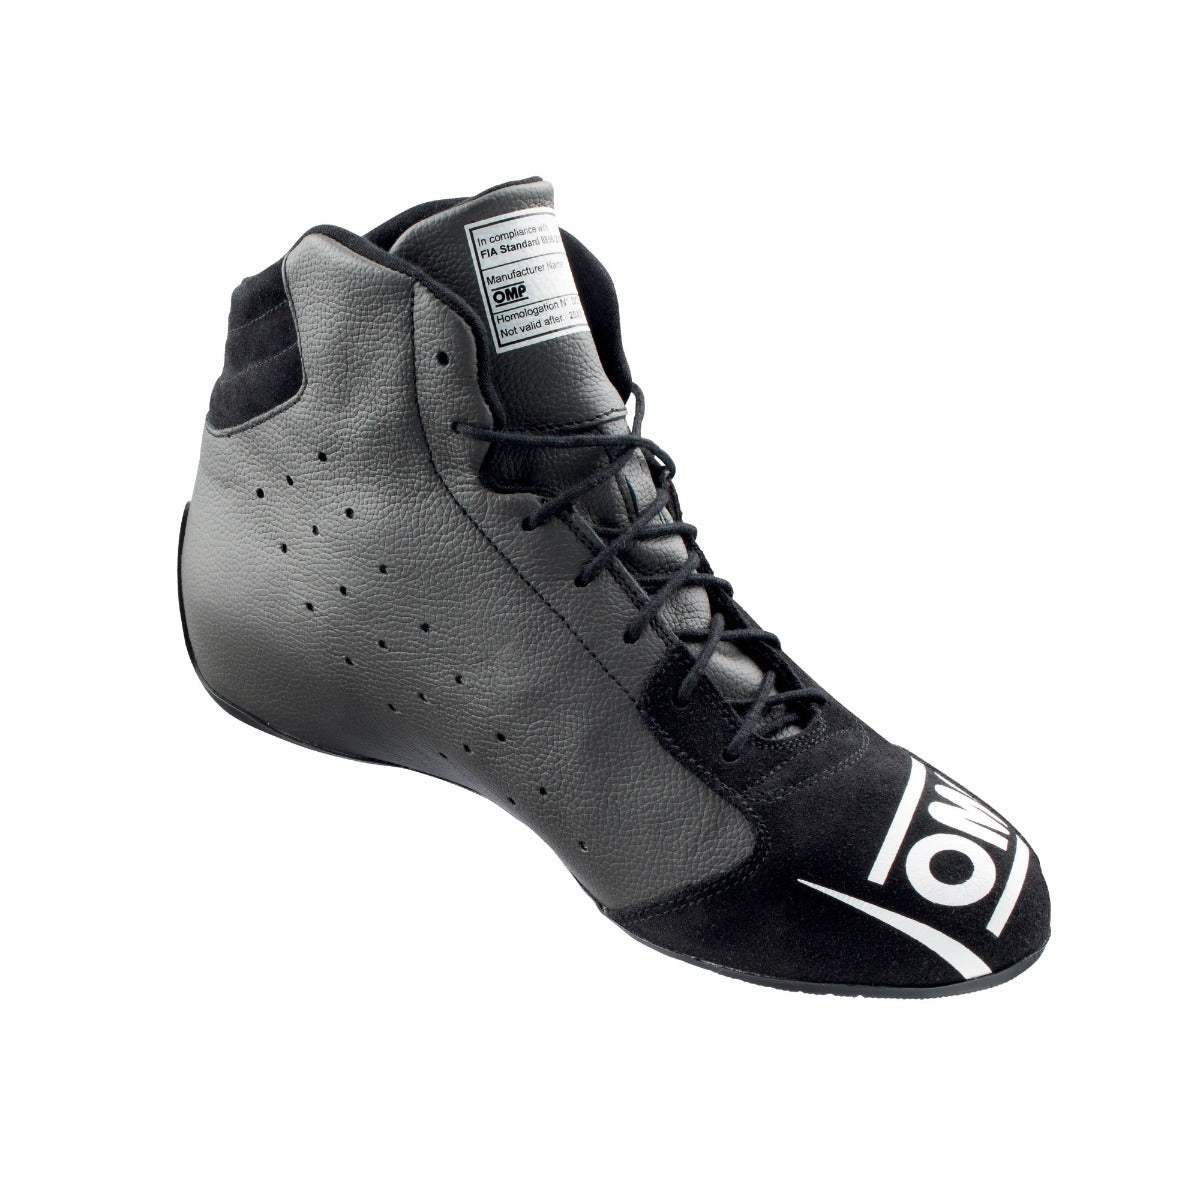 OMP Tecnica Racing Shoes Black/White Inside Image